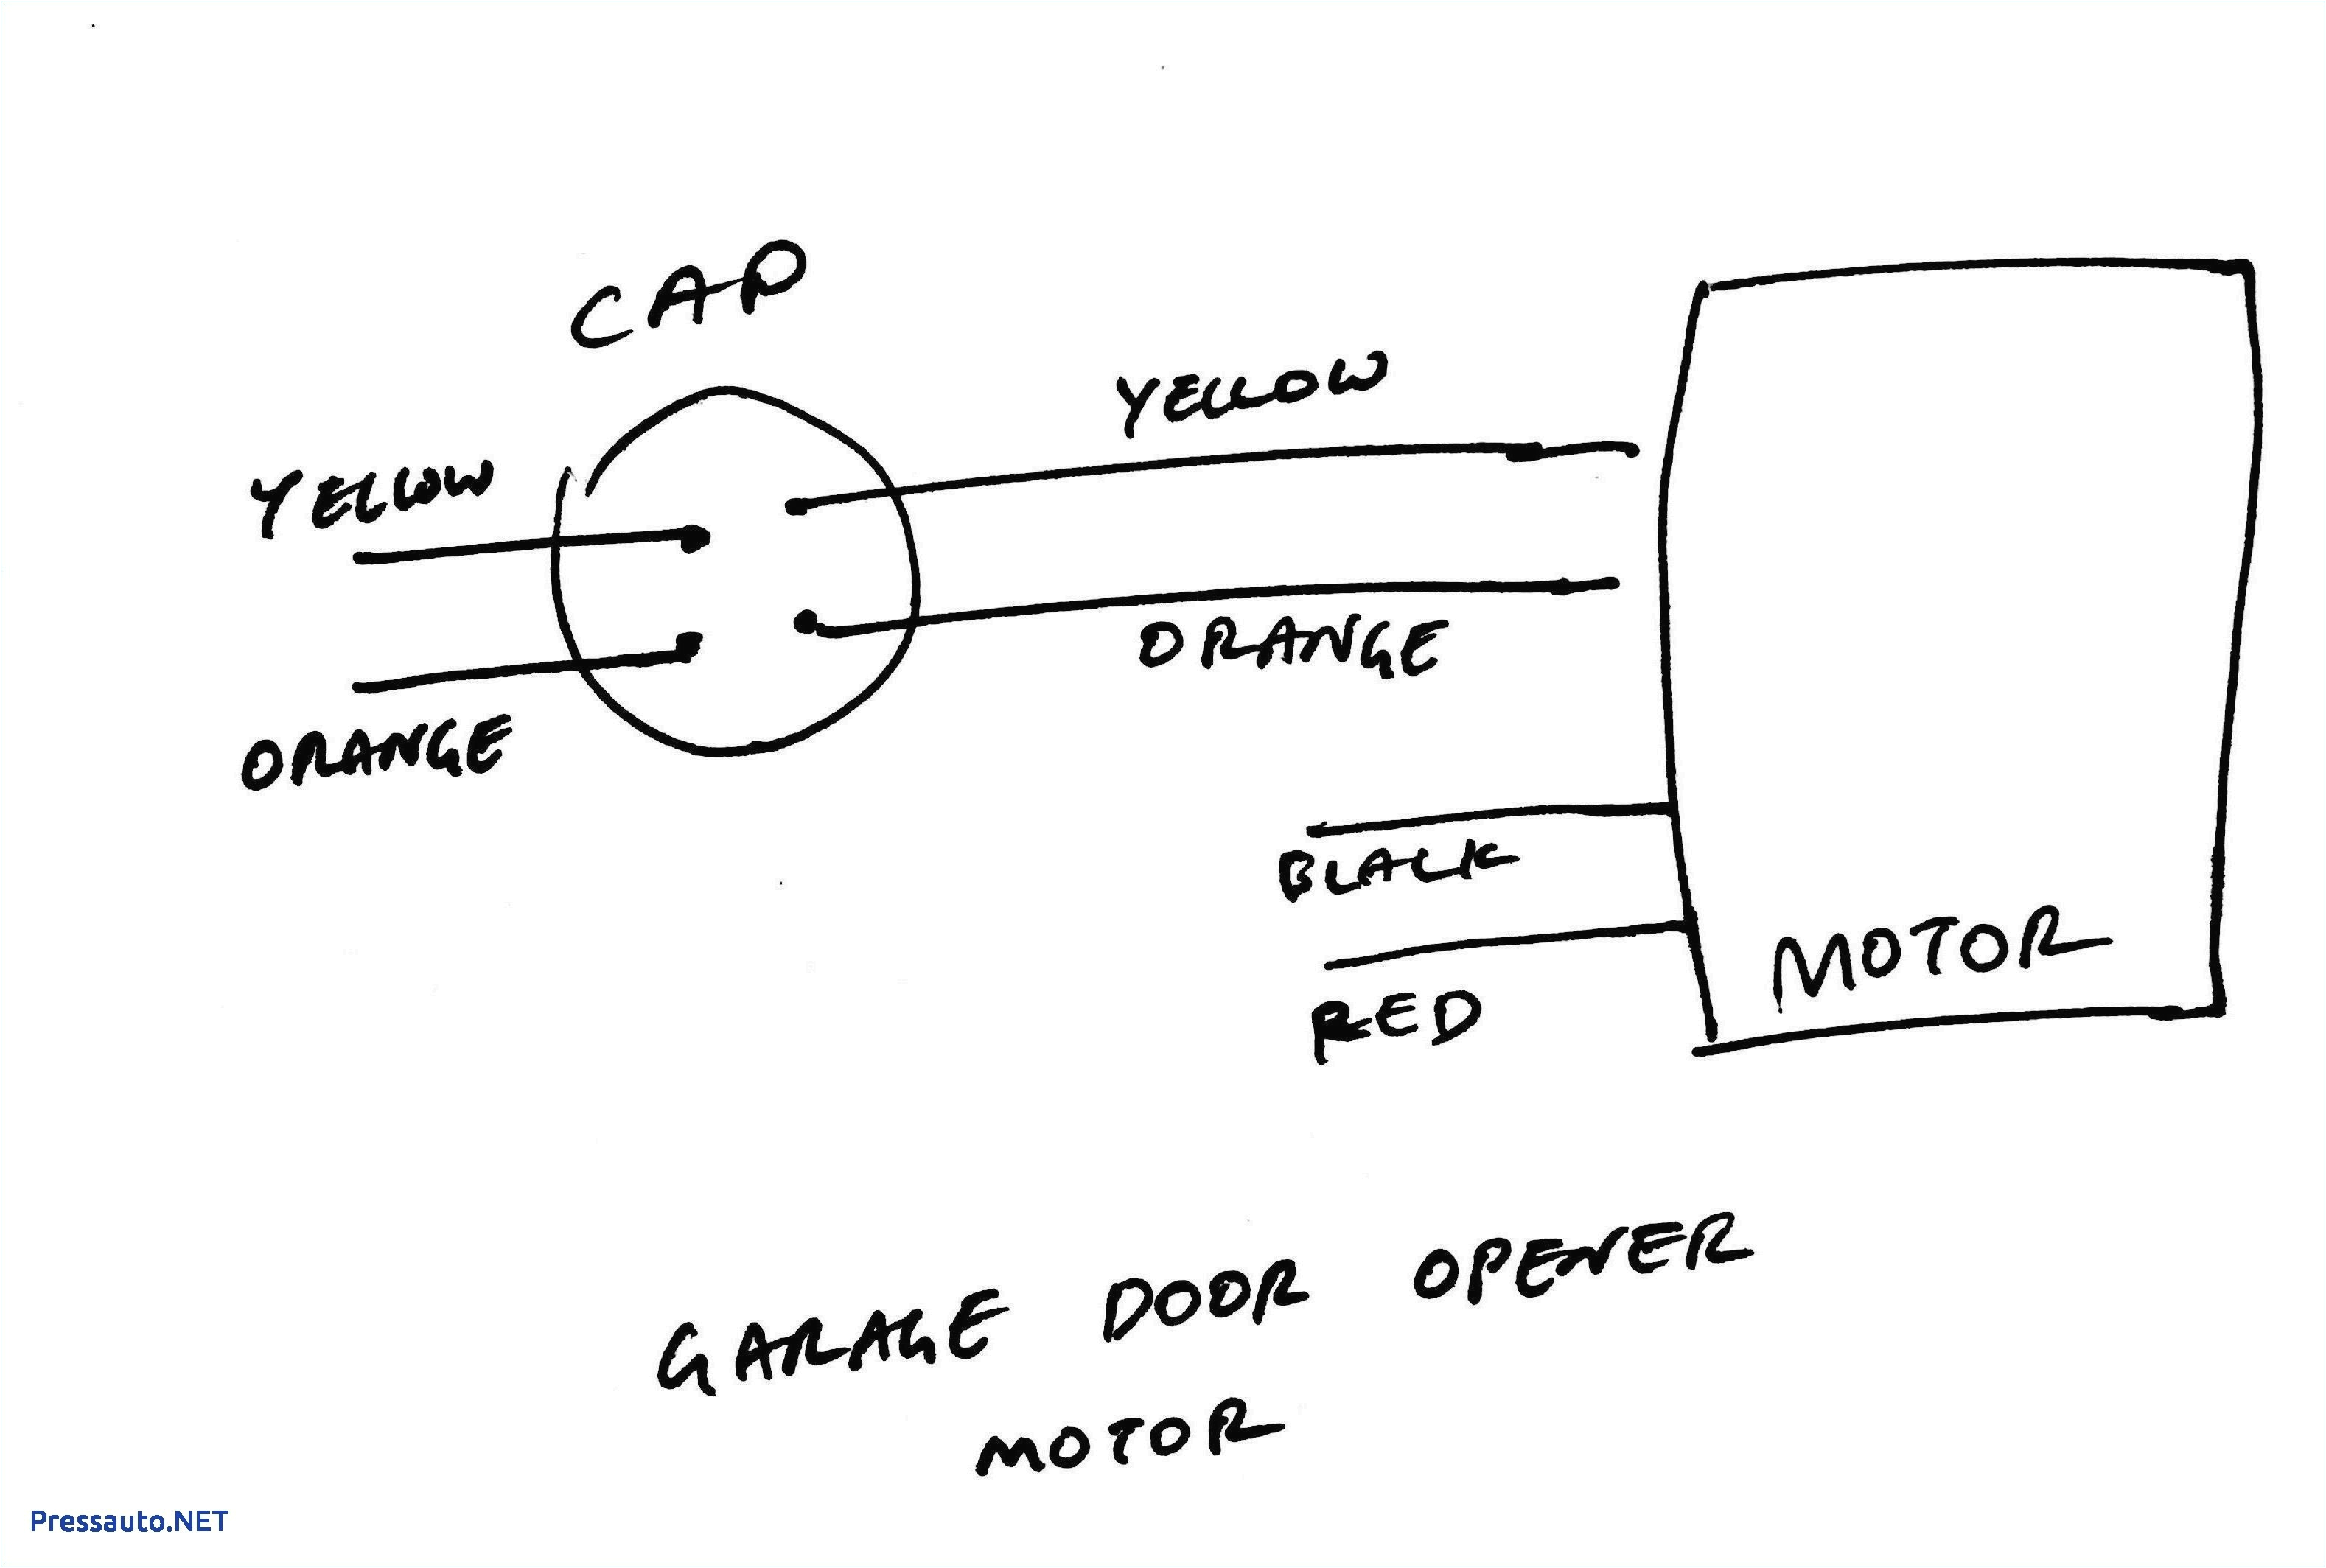 dc motor wiring diagram 4 wire dc motor wiring diagram 4 wire collection condenser fan wiring diagram brilliant 4 wire 17 1c jpg